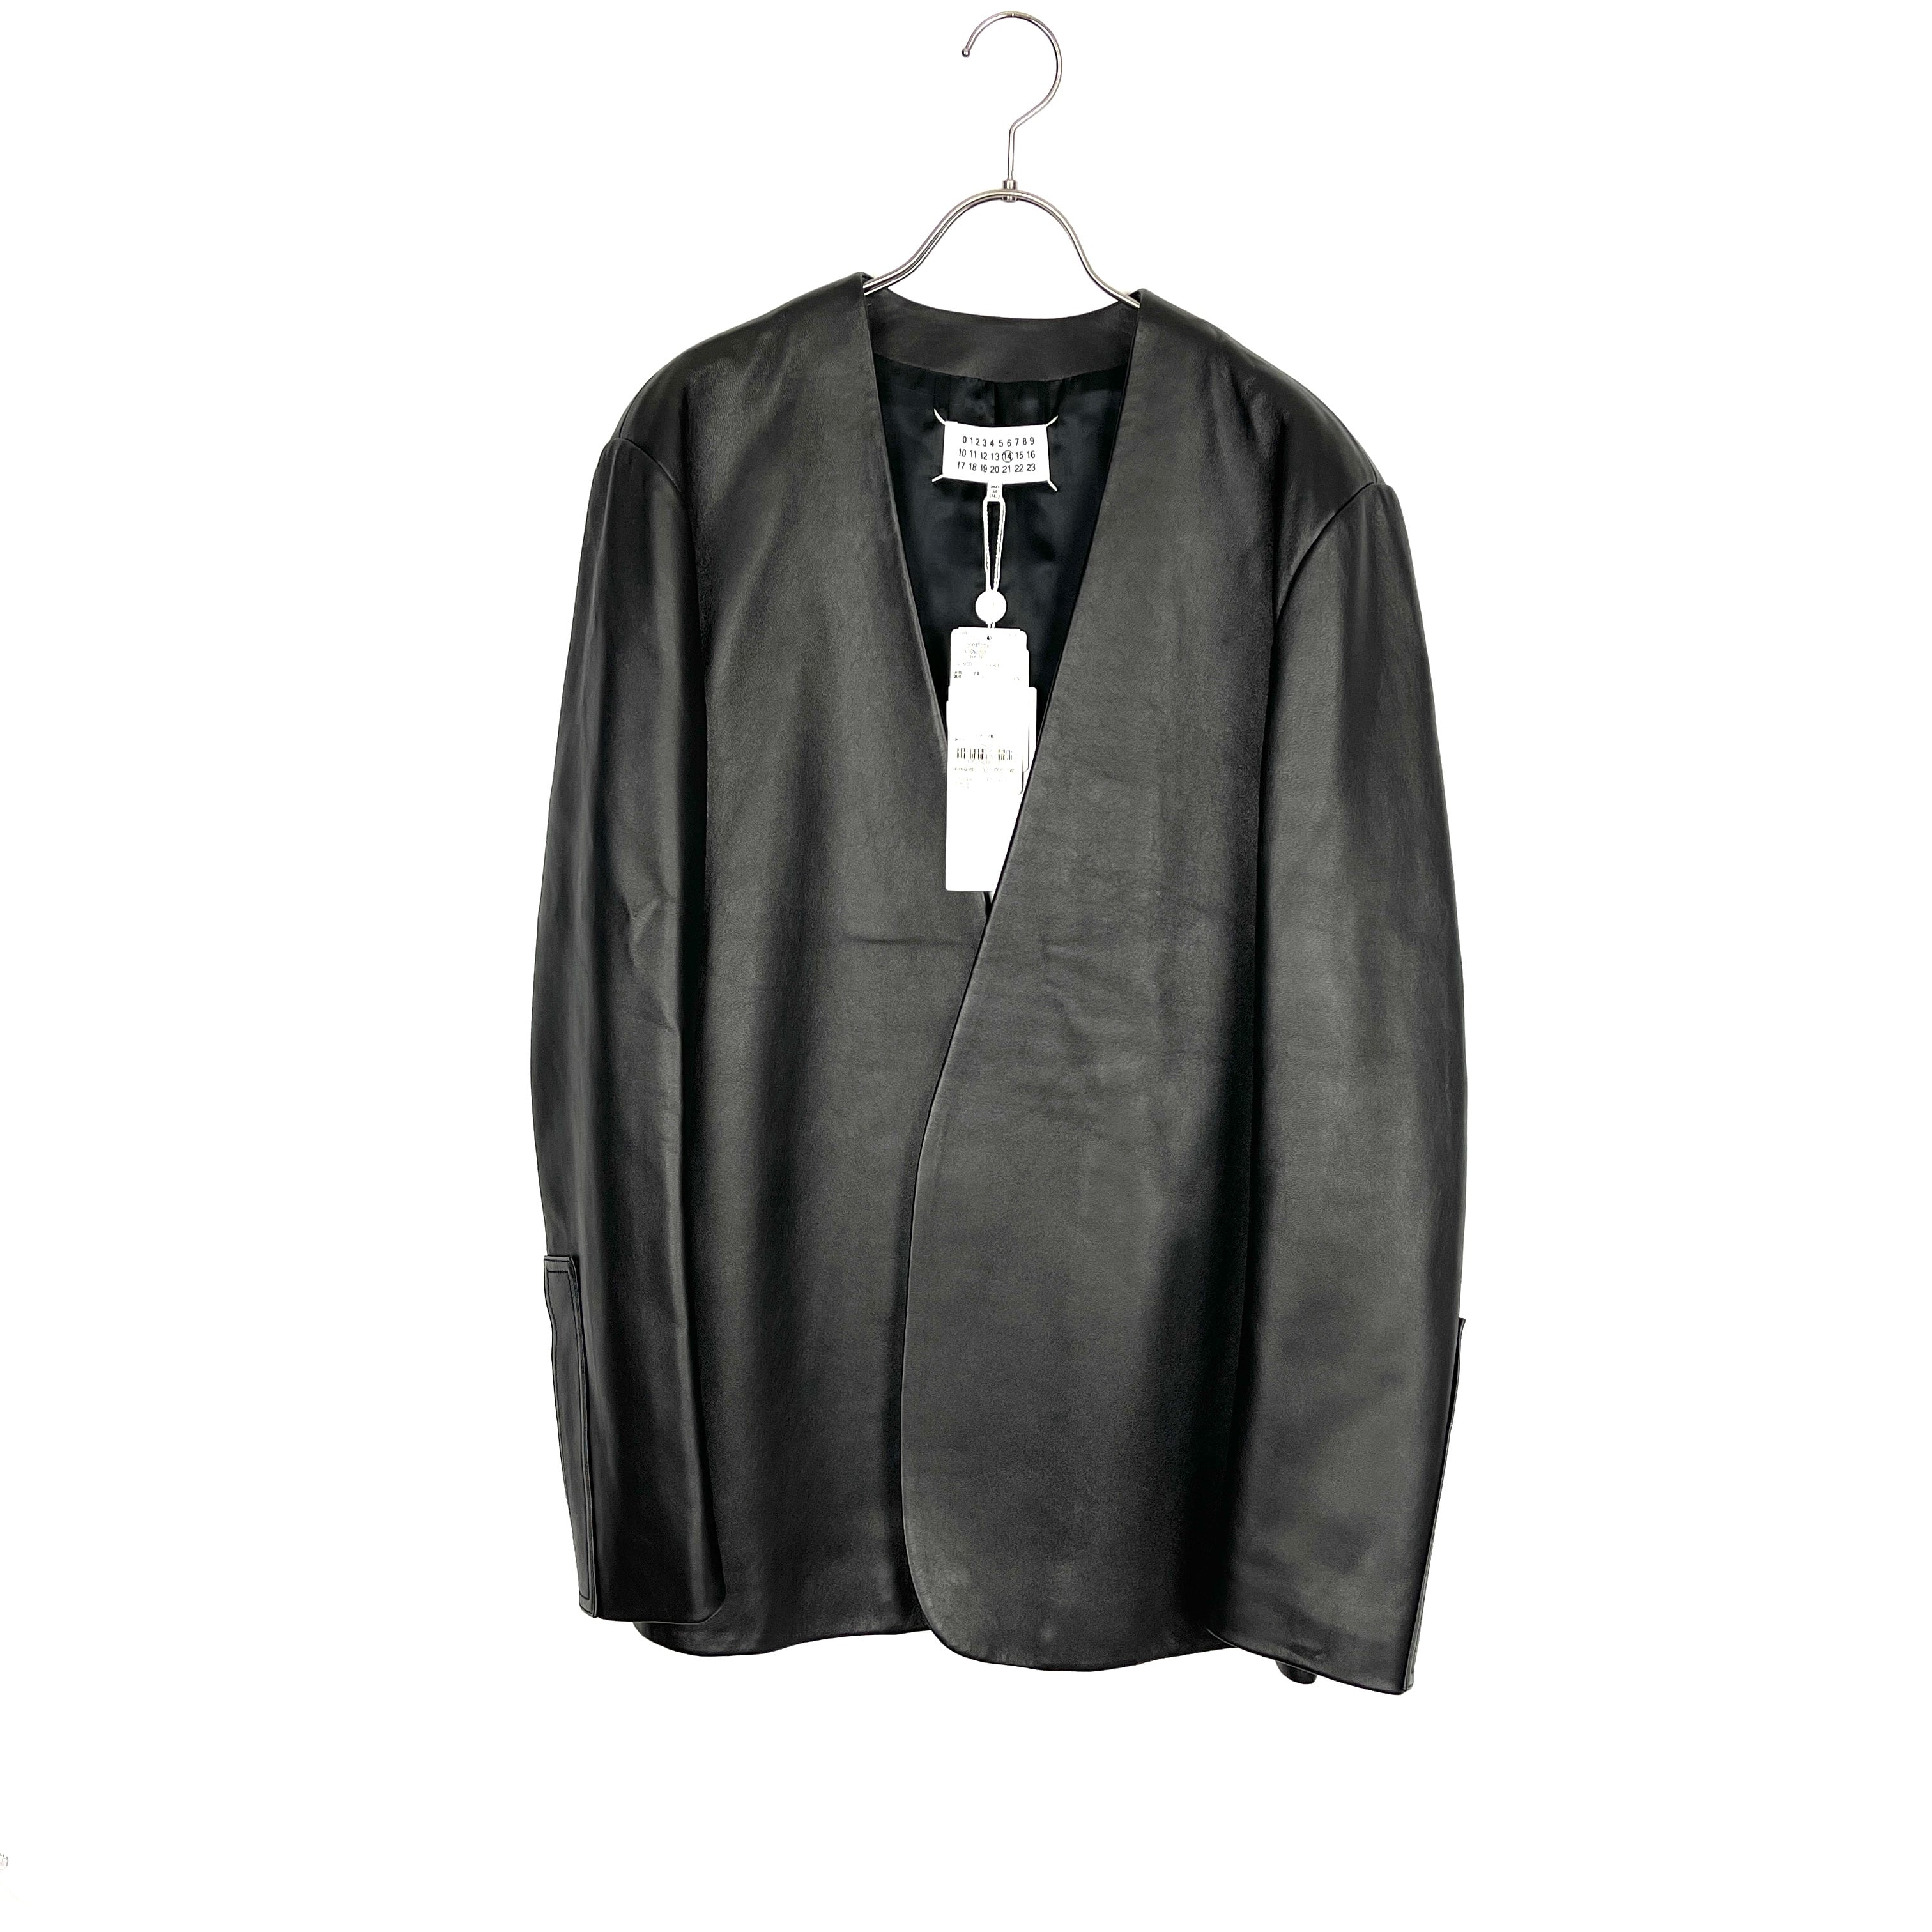 Masion Margiela(メゾン マルジェラ) collarless leather jacket 17AW 